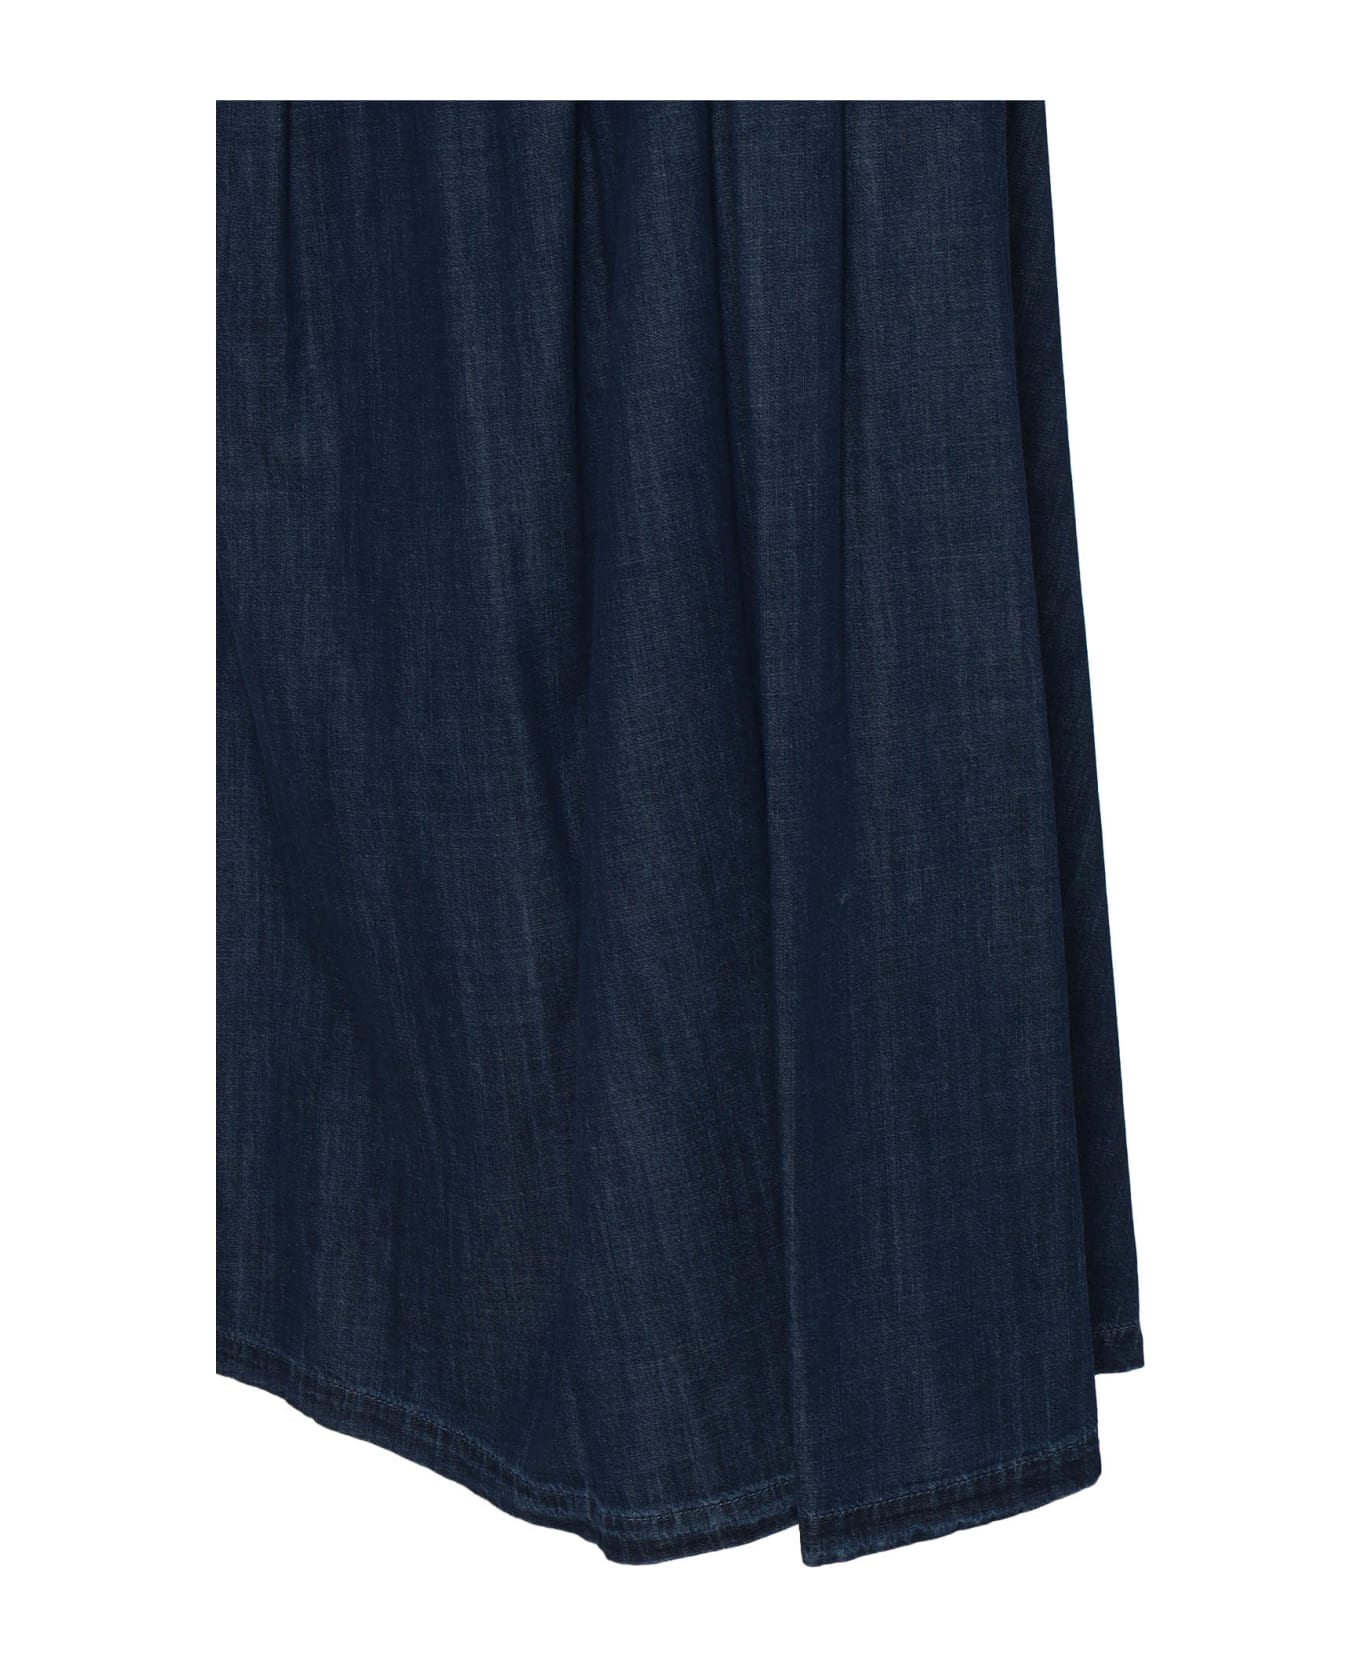 Lorena Antoniazzi Long Denim Skirt - BLUE